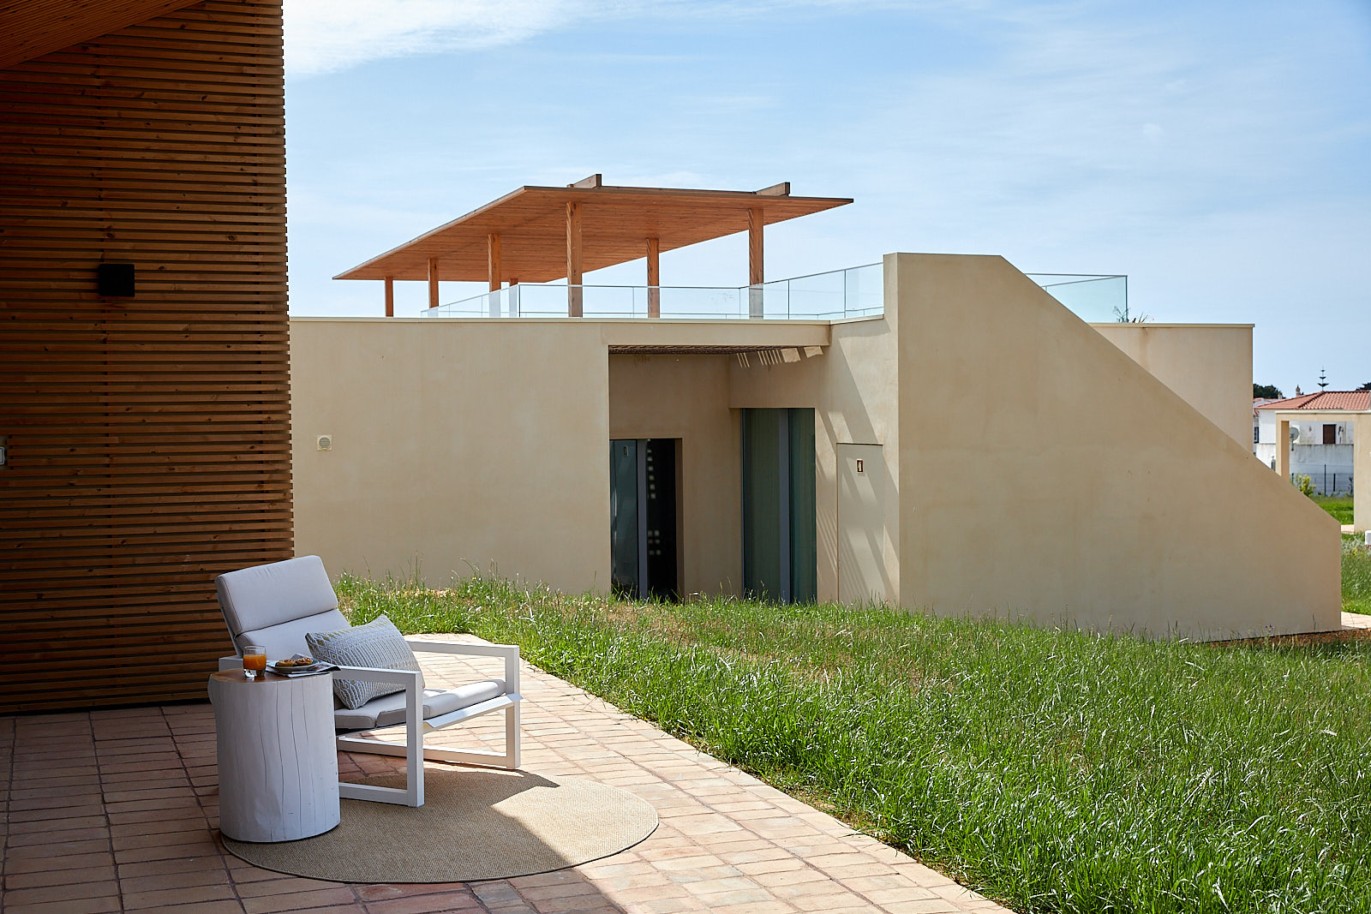 2 bedroom apartment in resort, for sale in Porches, Algarve_229127